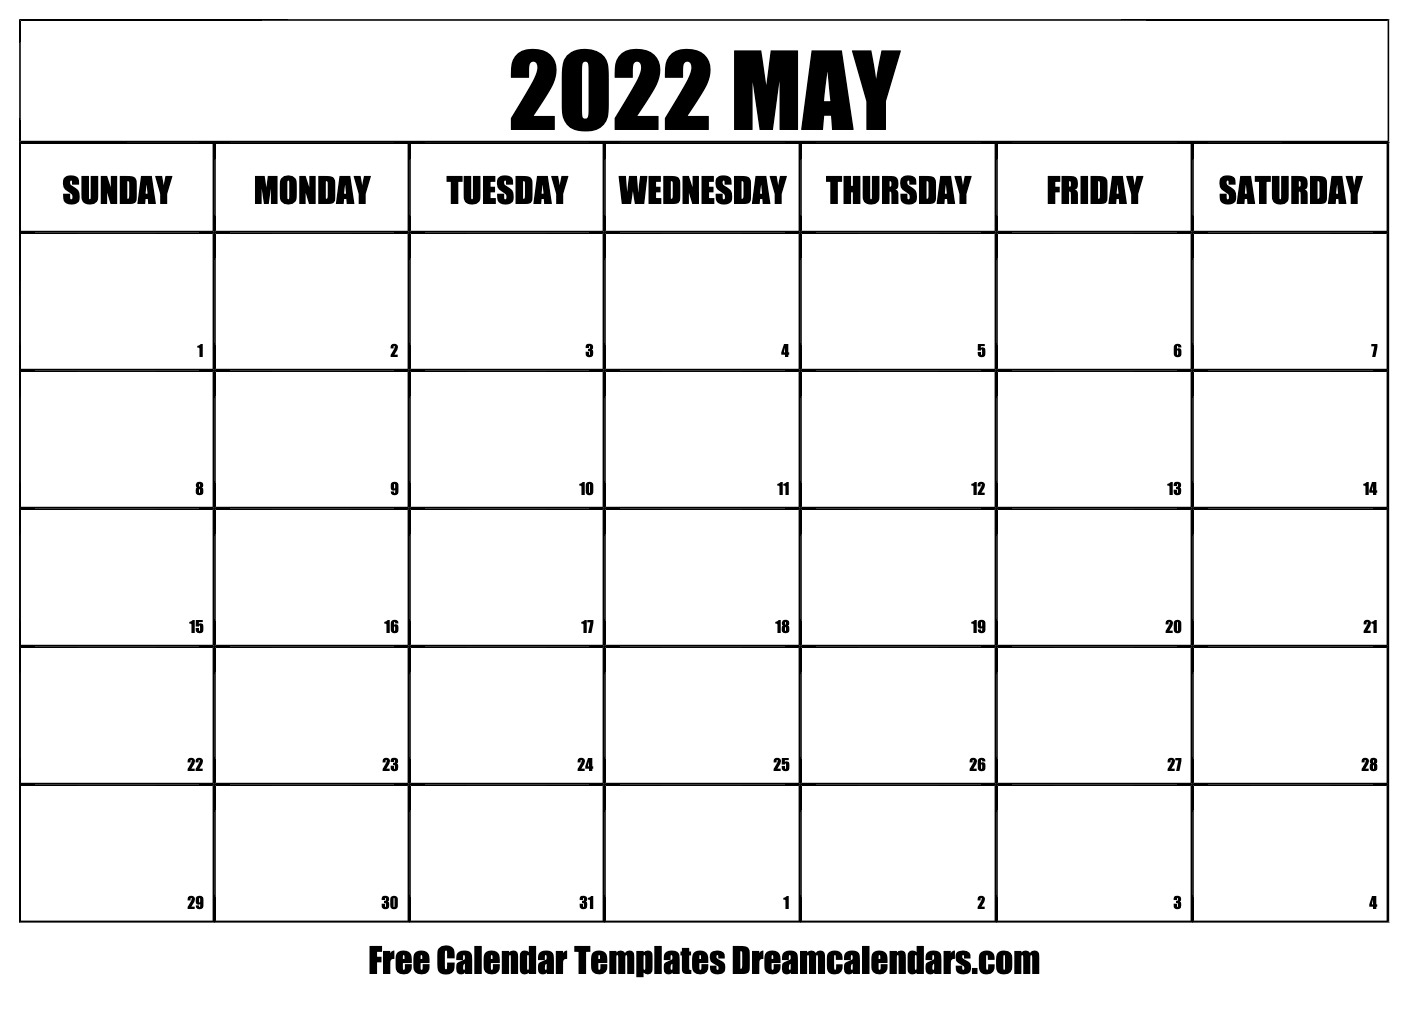 Take May 2022 Calendar With Us Holidays